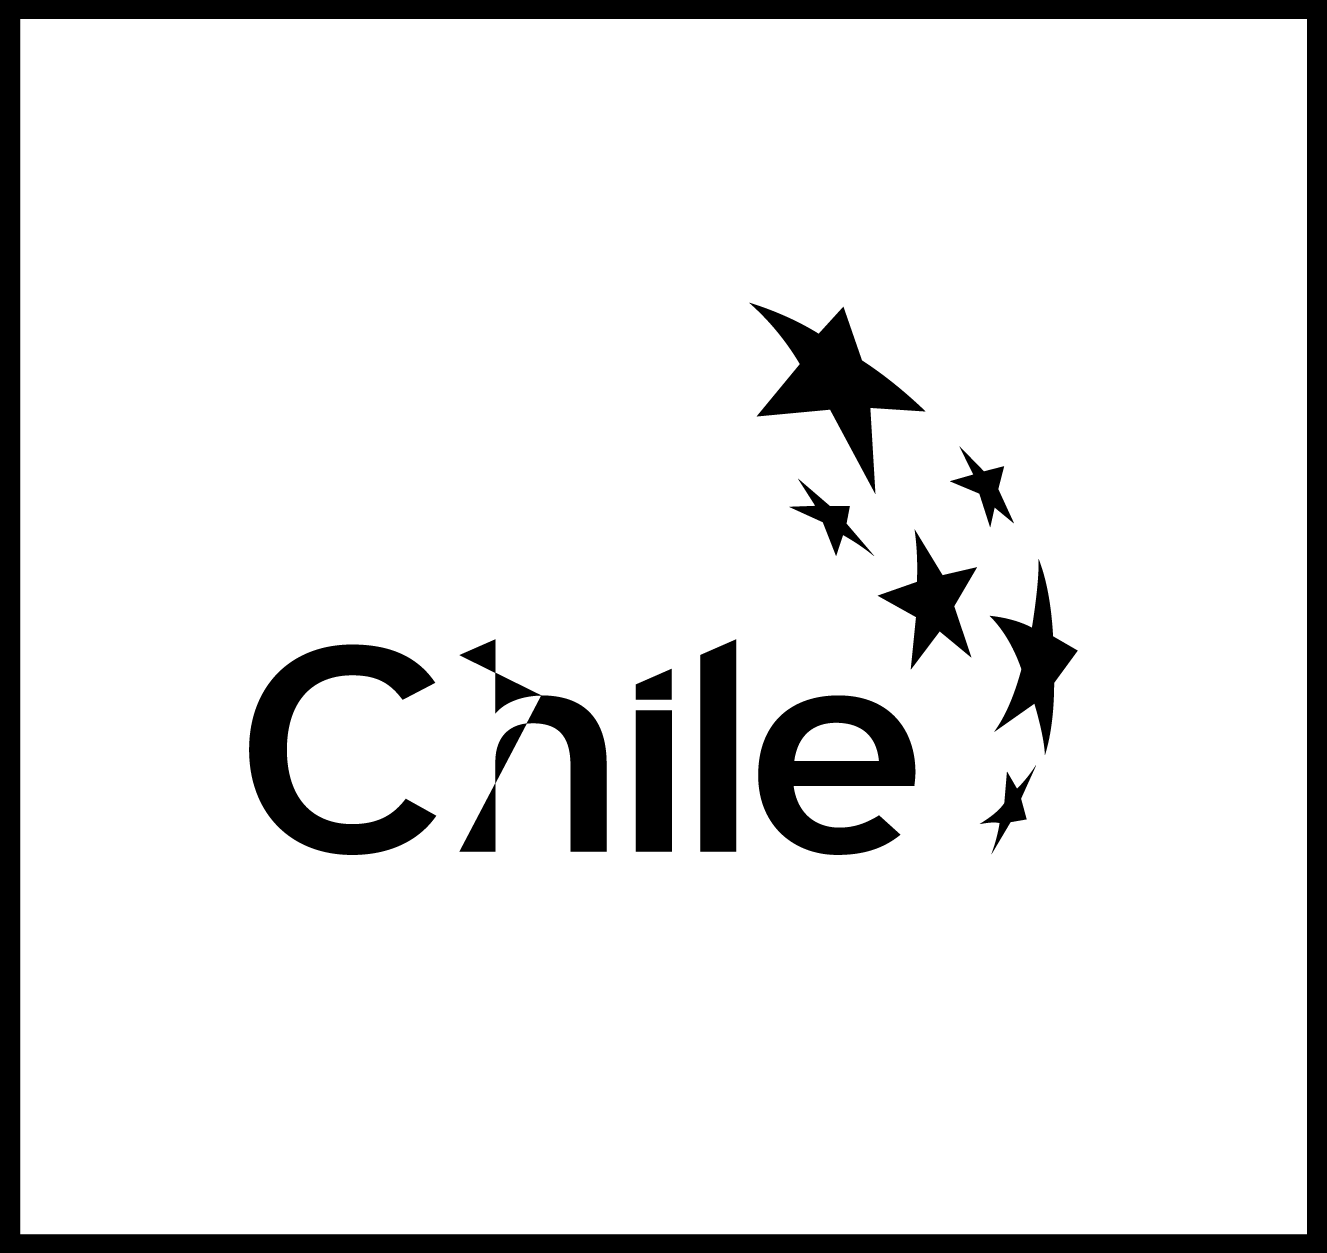 Logo Marca Chile